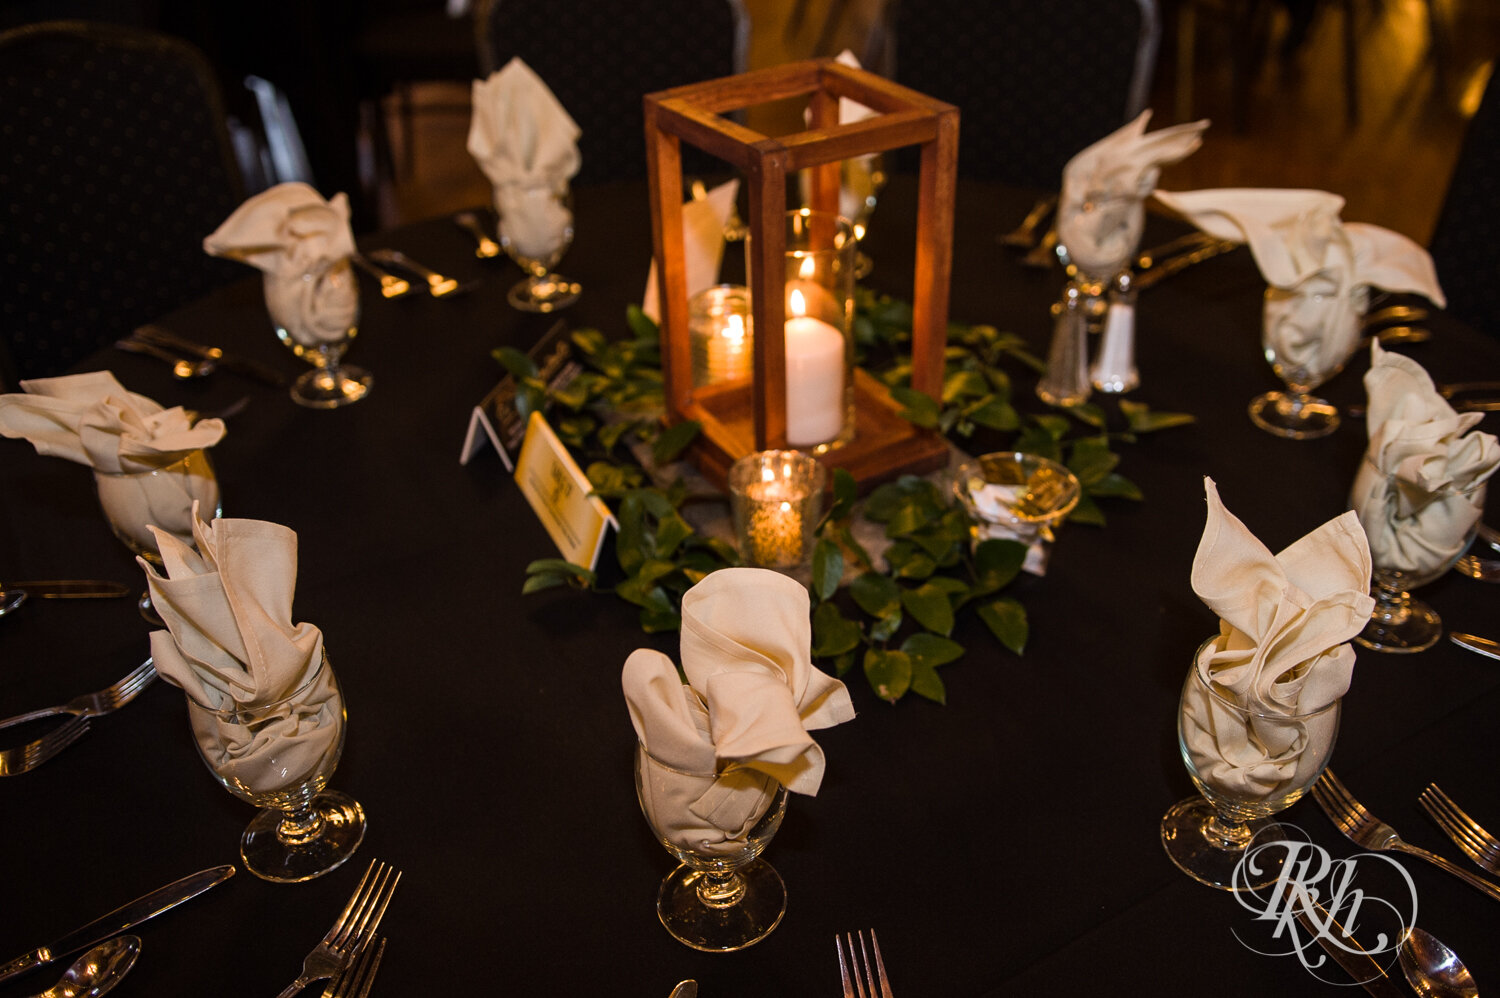 Indoor wedding reception setup at Kellerman's Event Center in White Bear Lake, Minnesota.